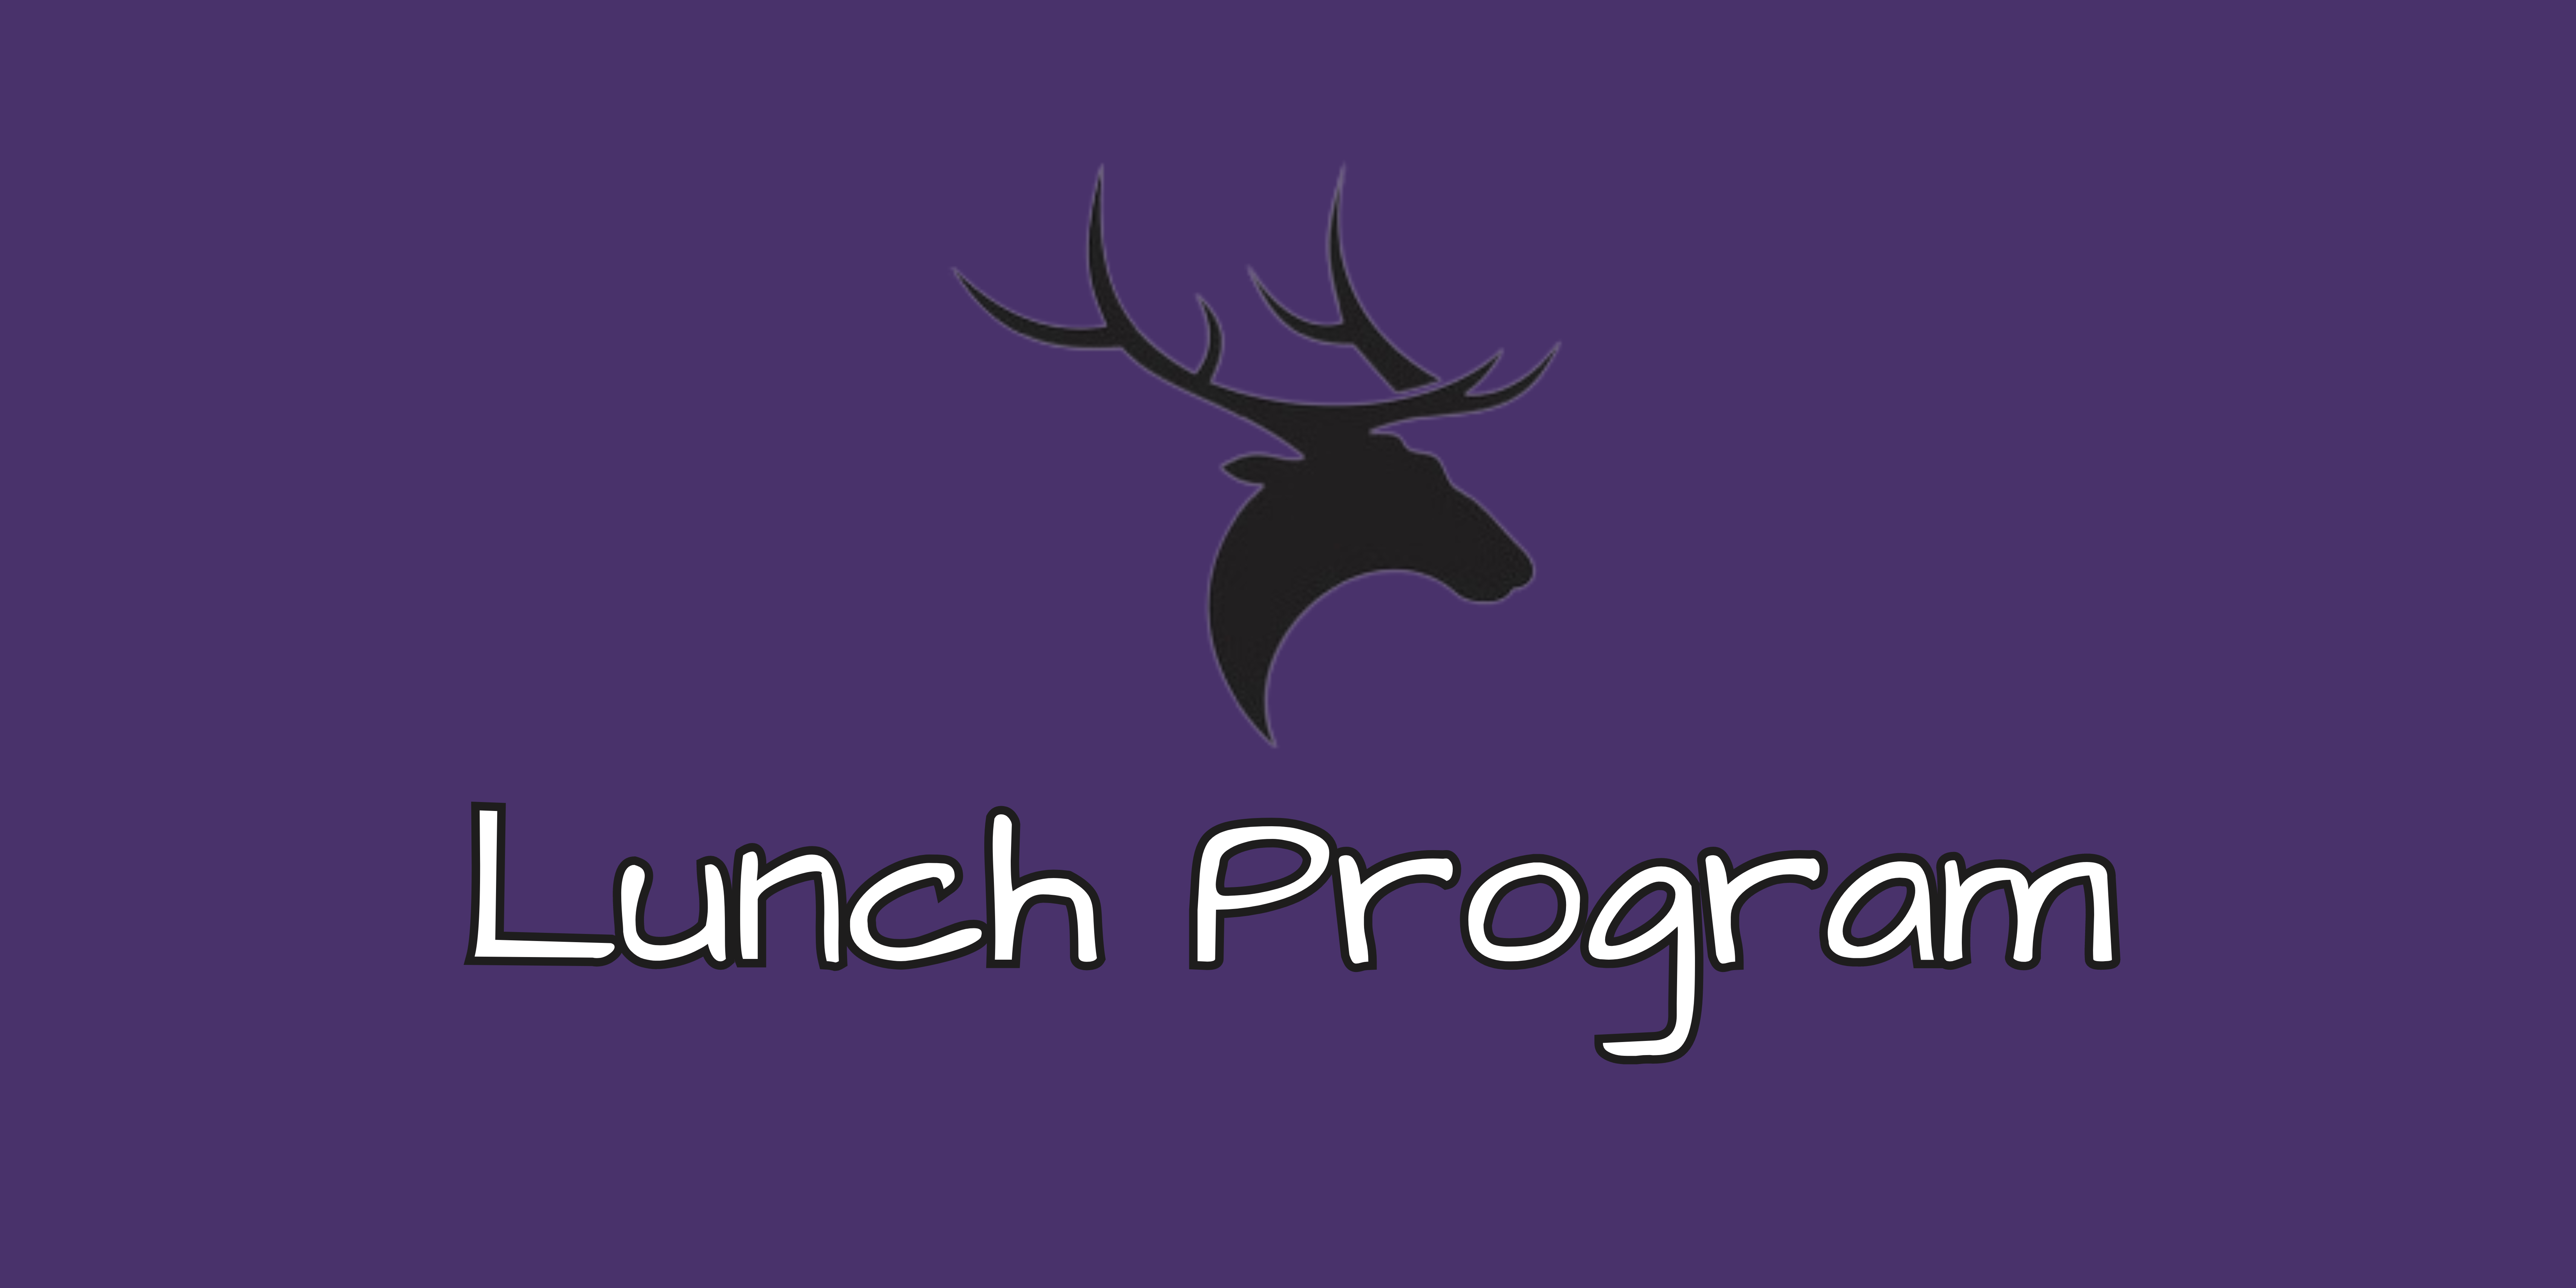 Lunch program with a black elk